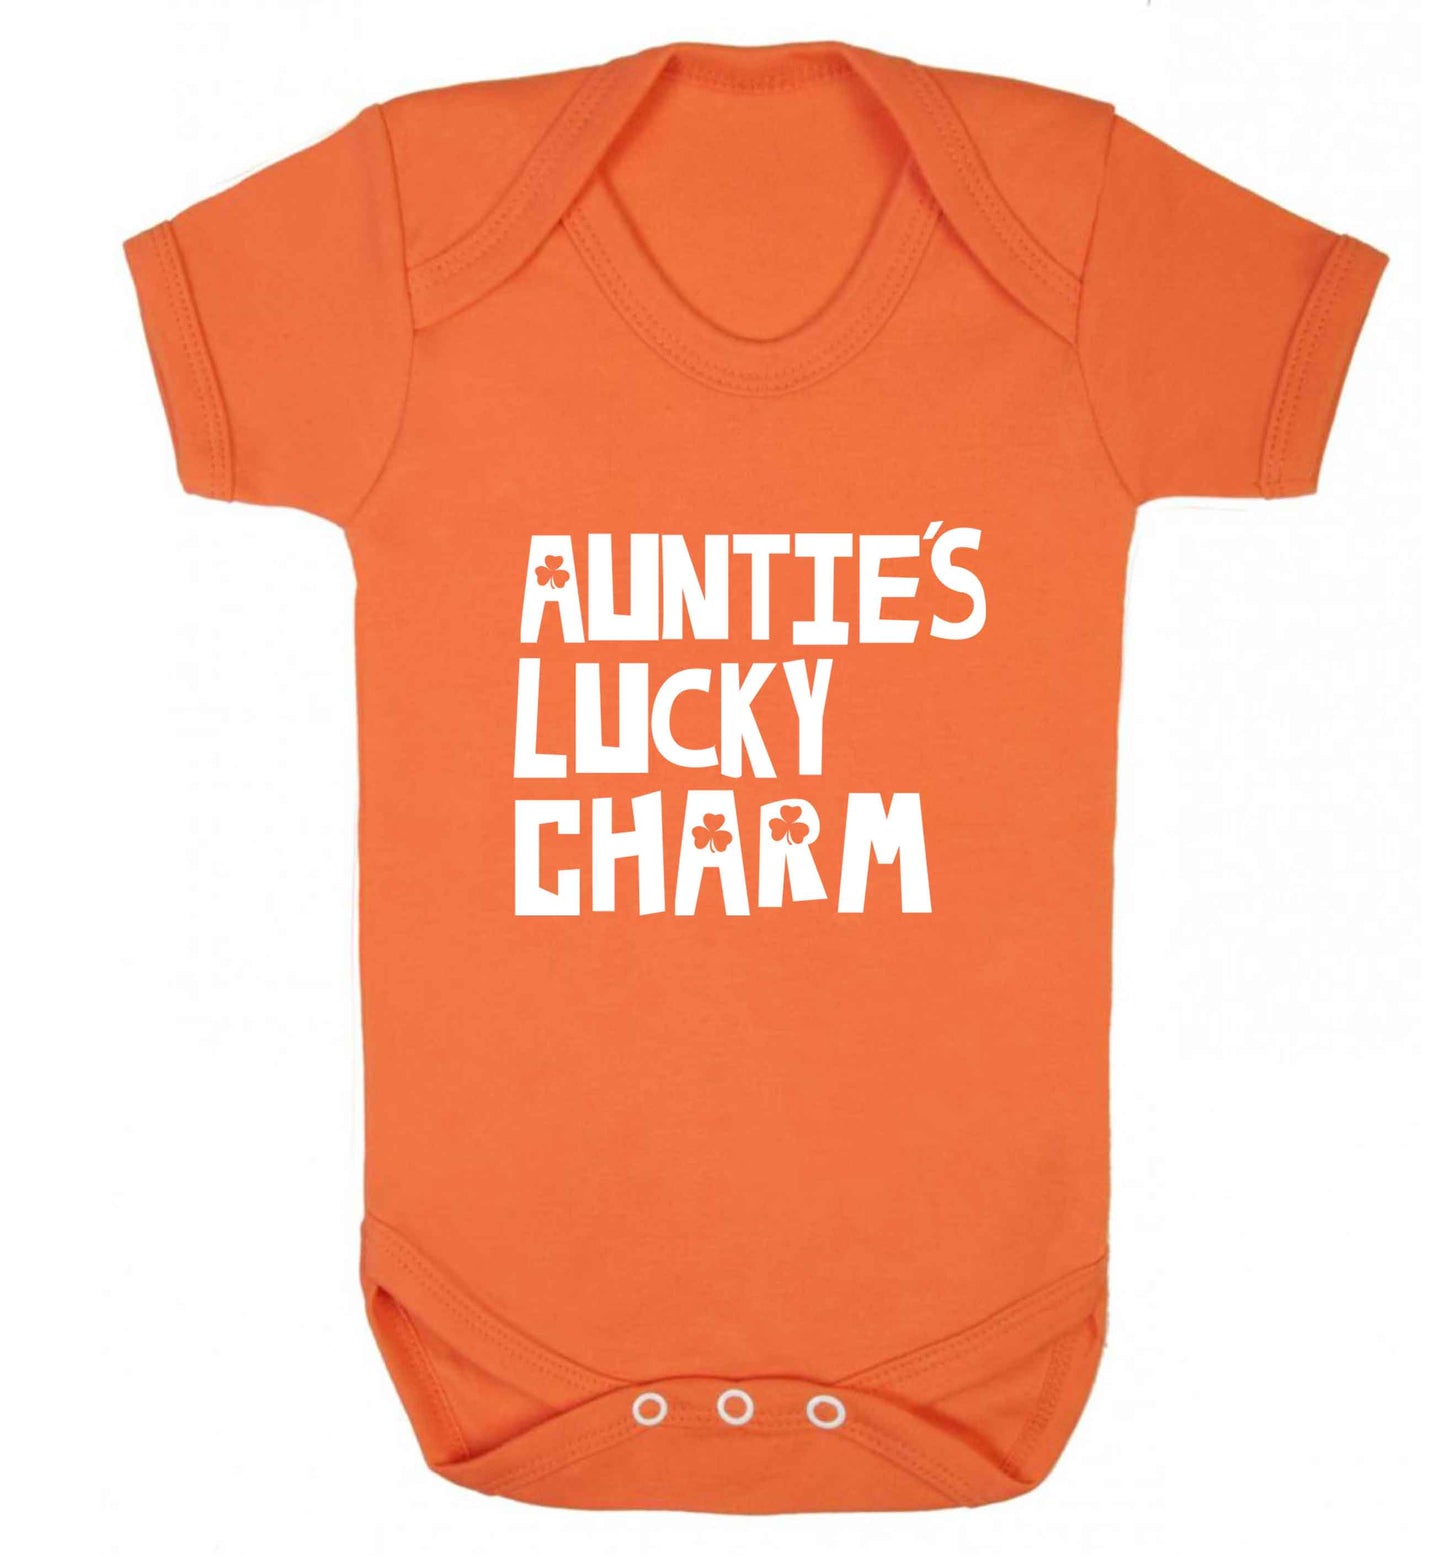 Auntie's lucky charm baby vest orange 18-24 months